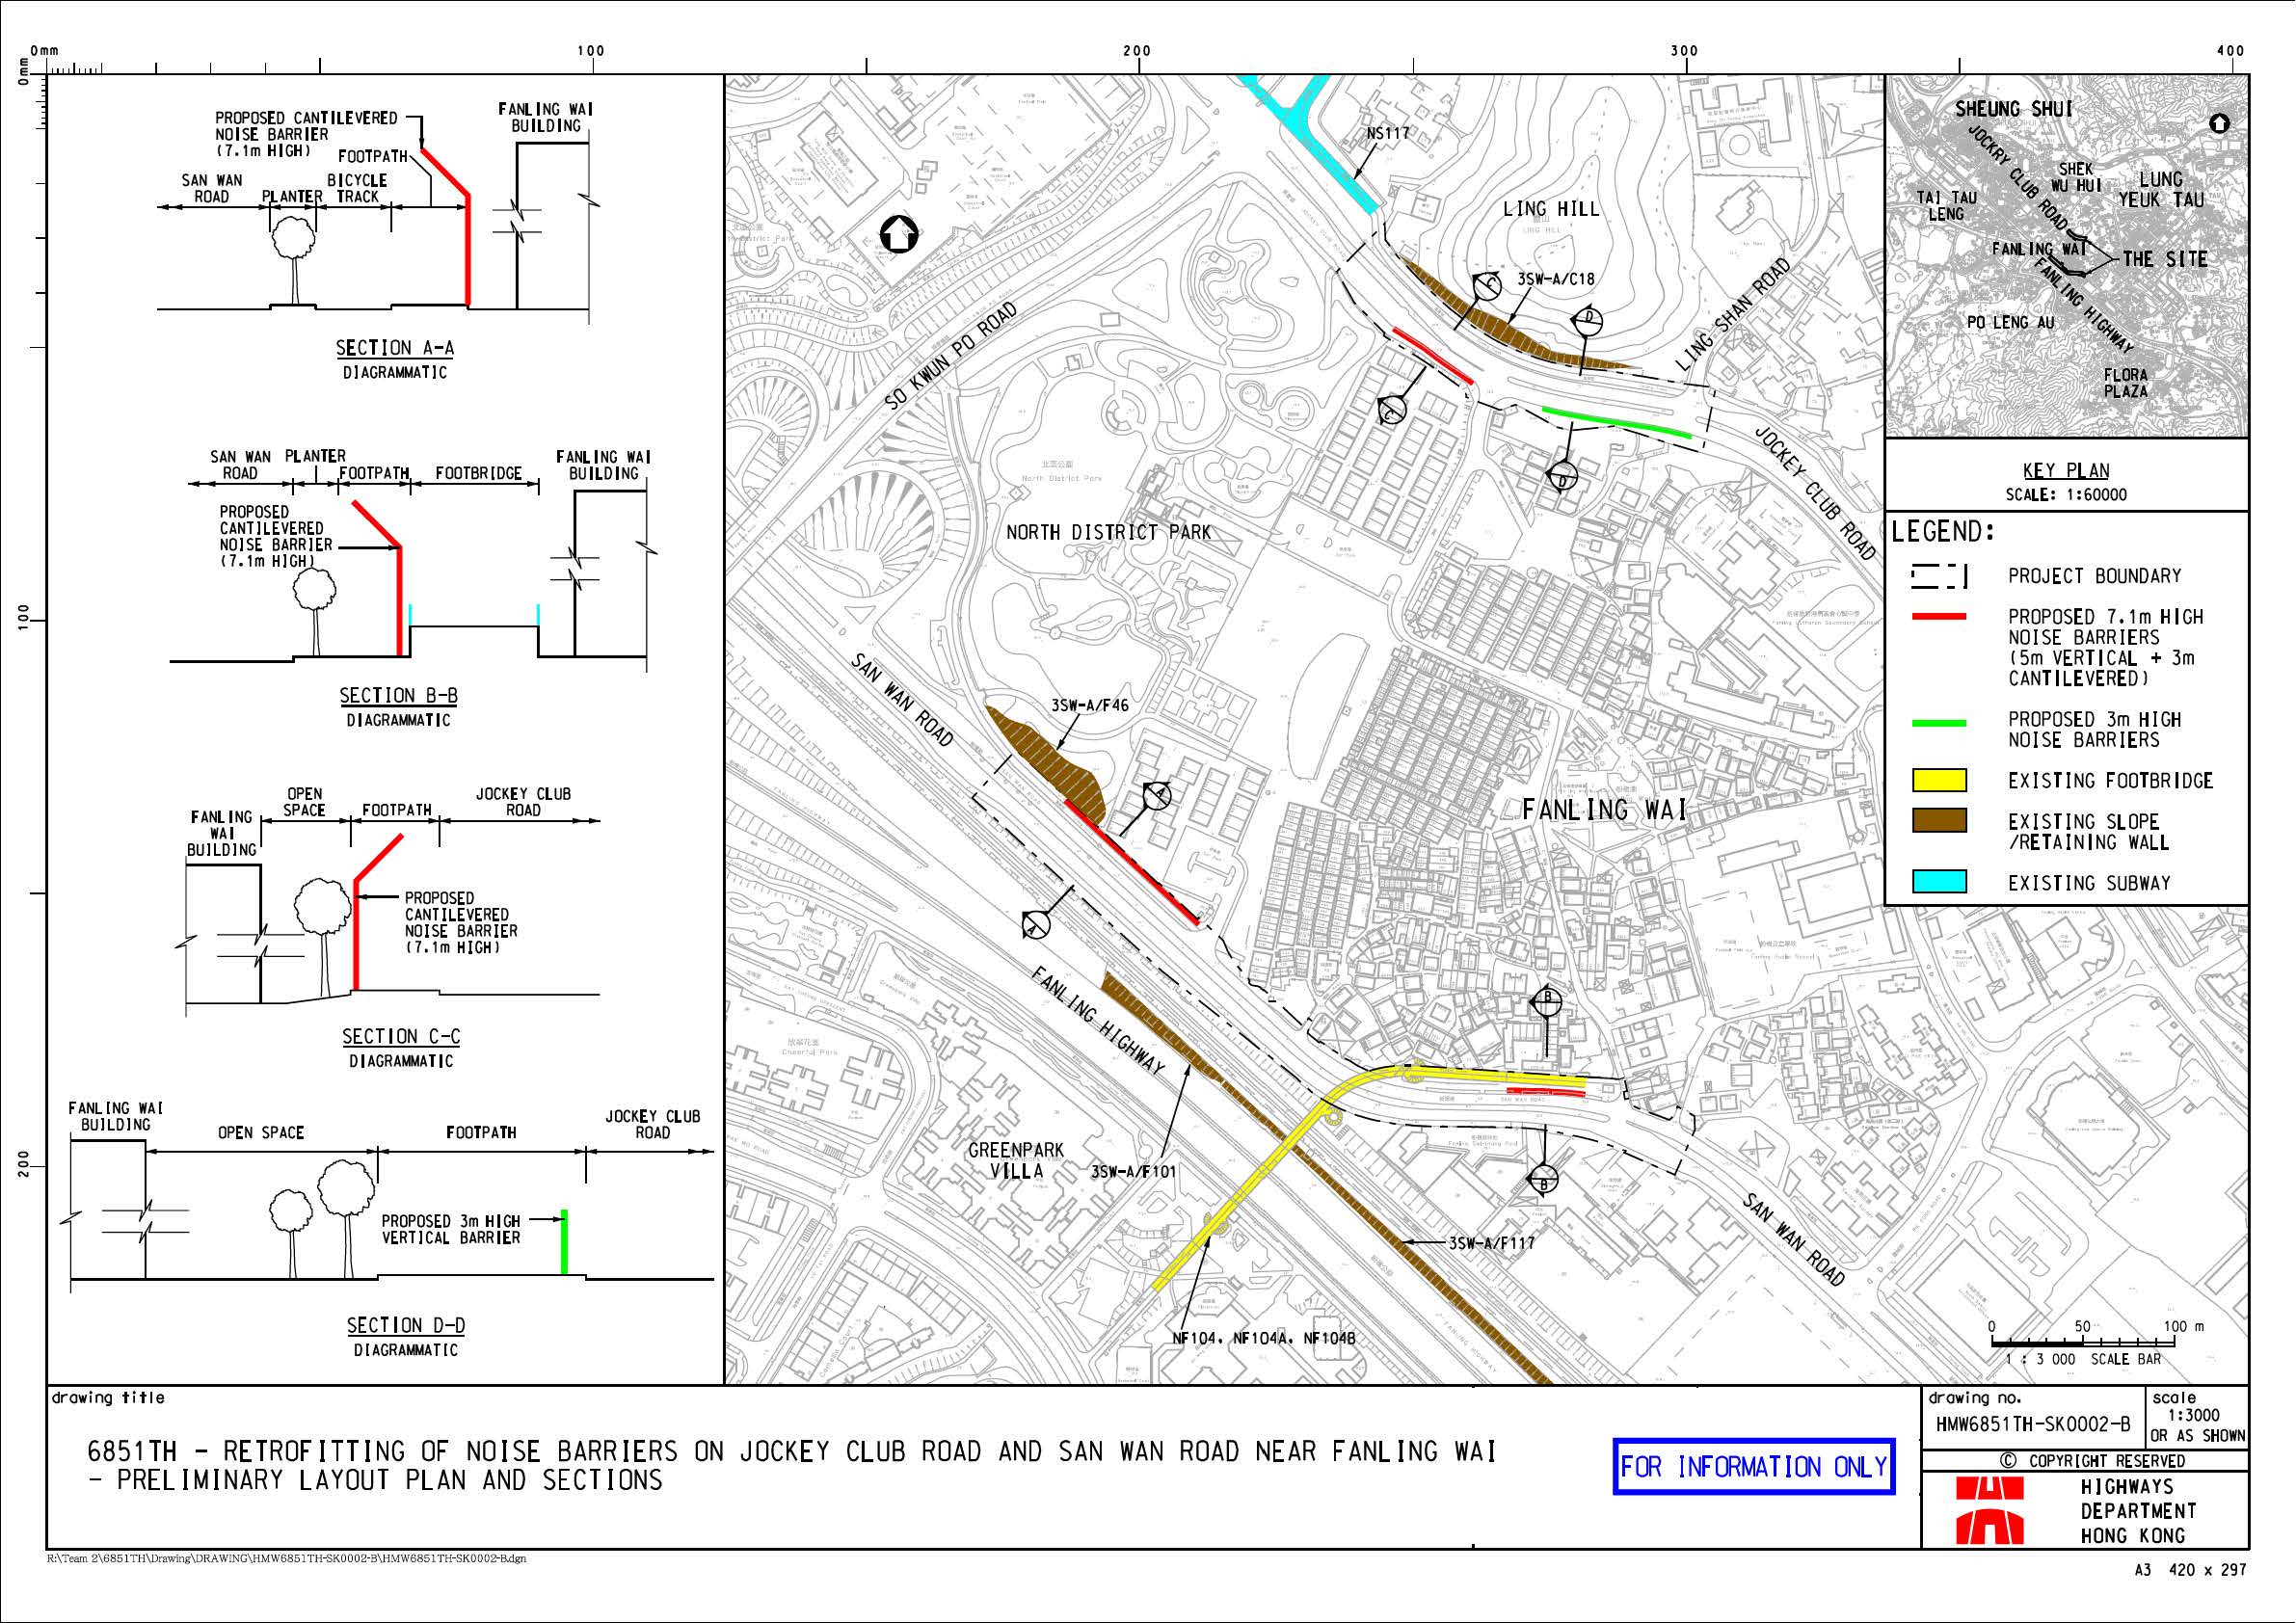 Layout Plan of Retrofitting of Noise Barriers on Jockey Club Road and San Wan Road near Fanling Wai